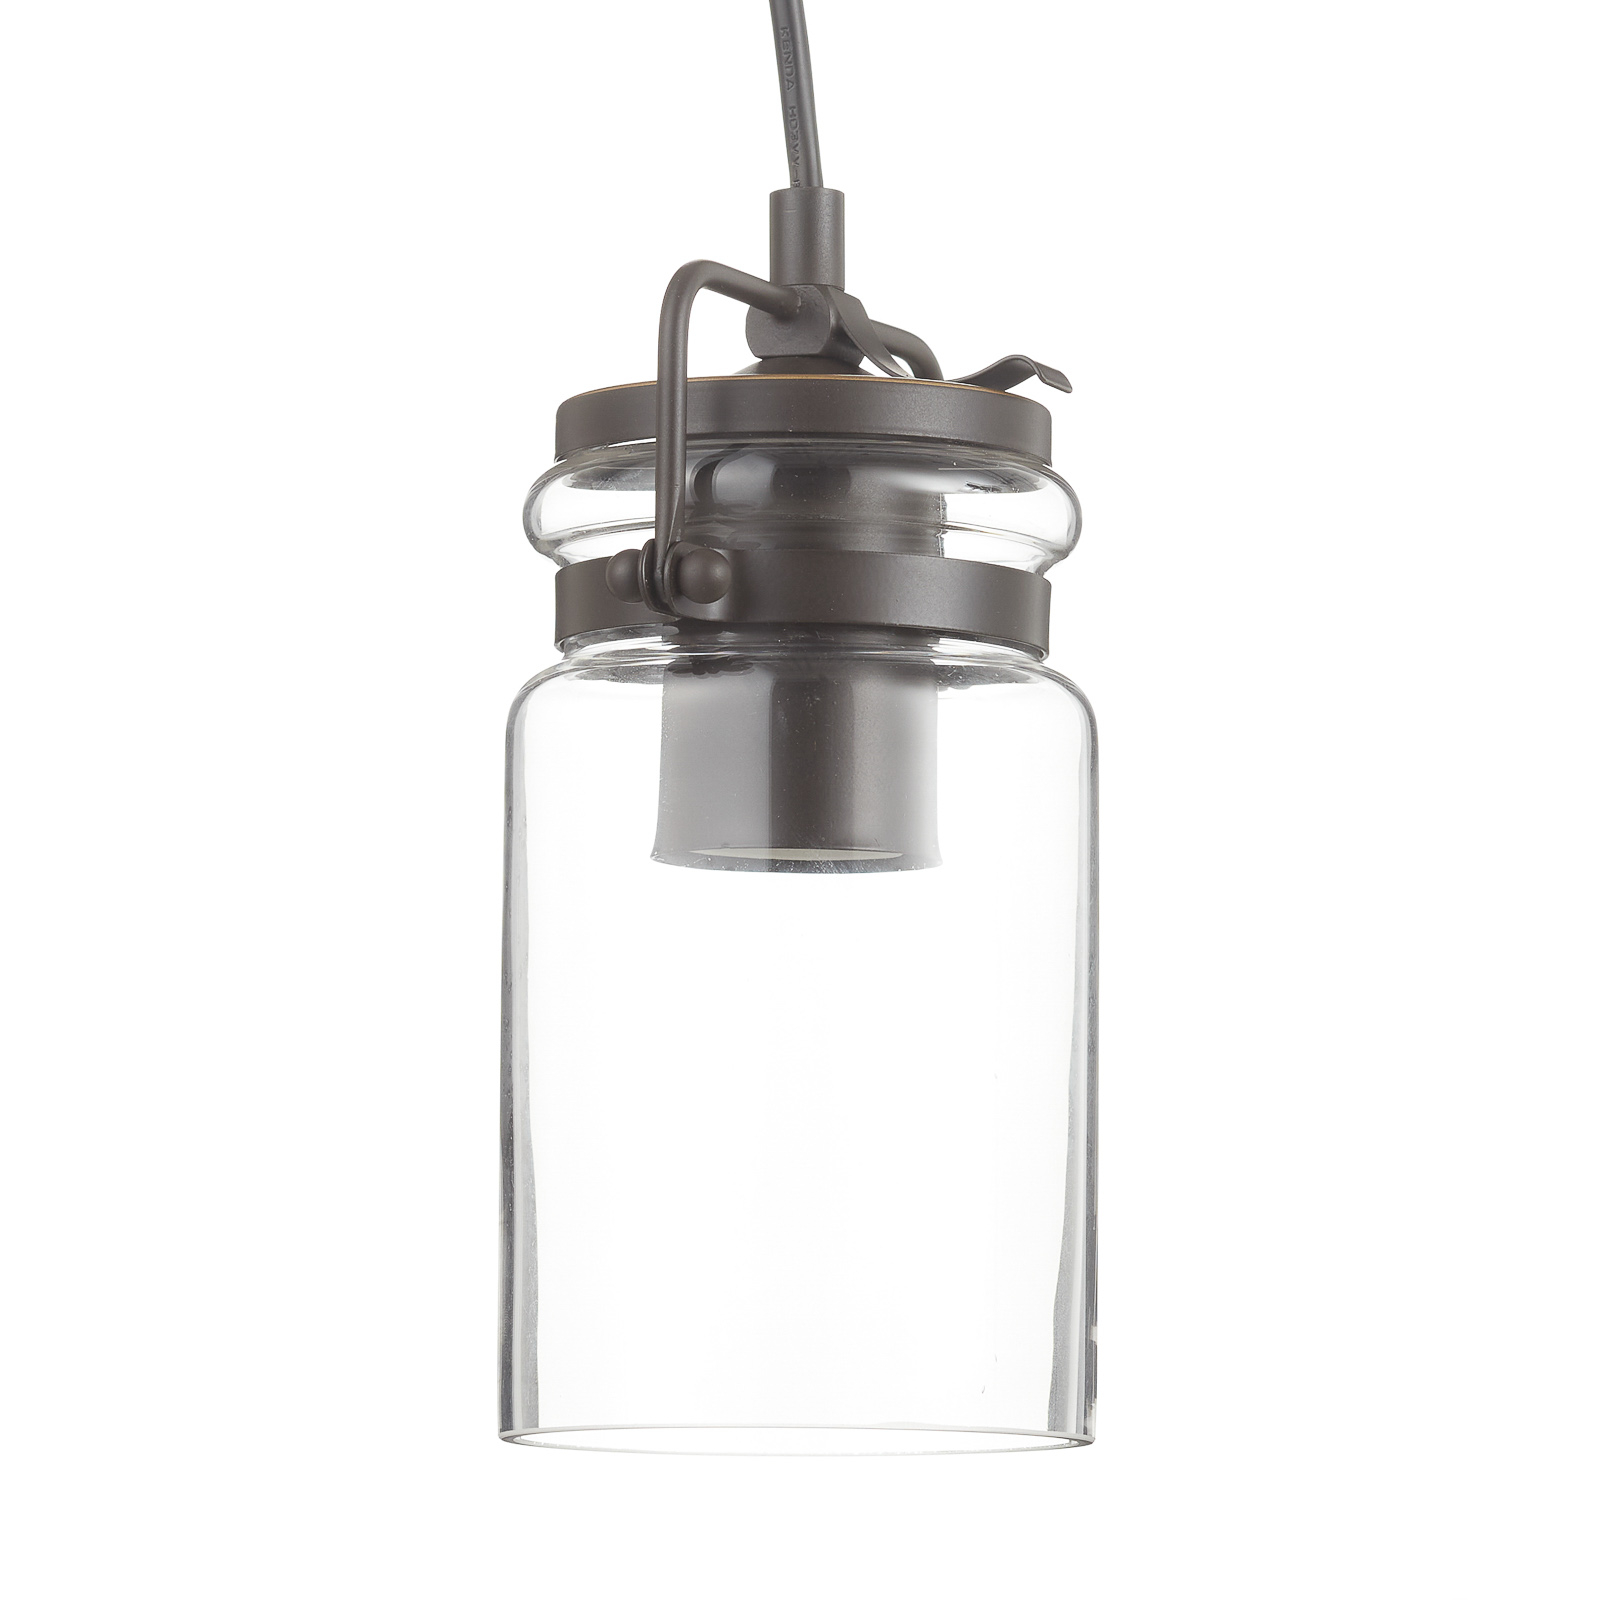 Glas-hanglamp Brinley met één lampje